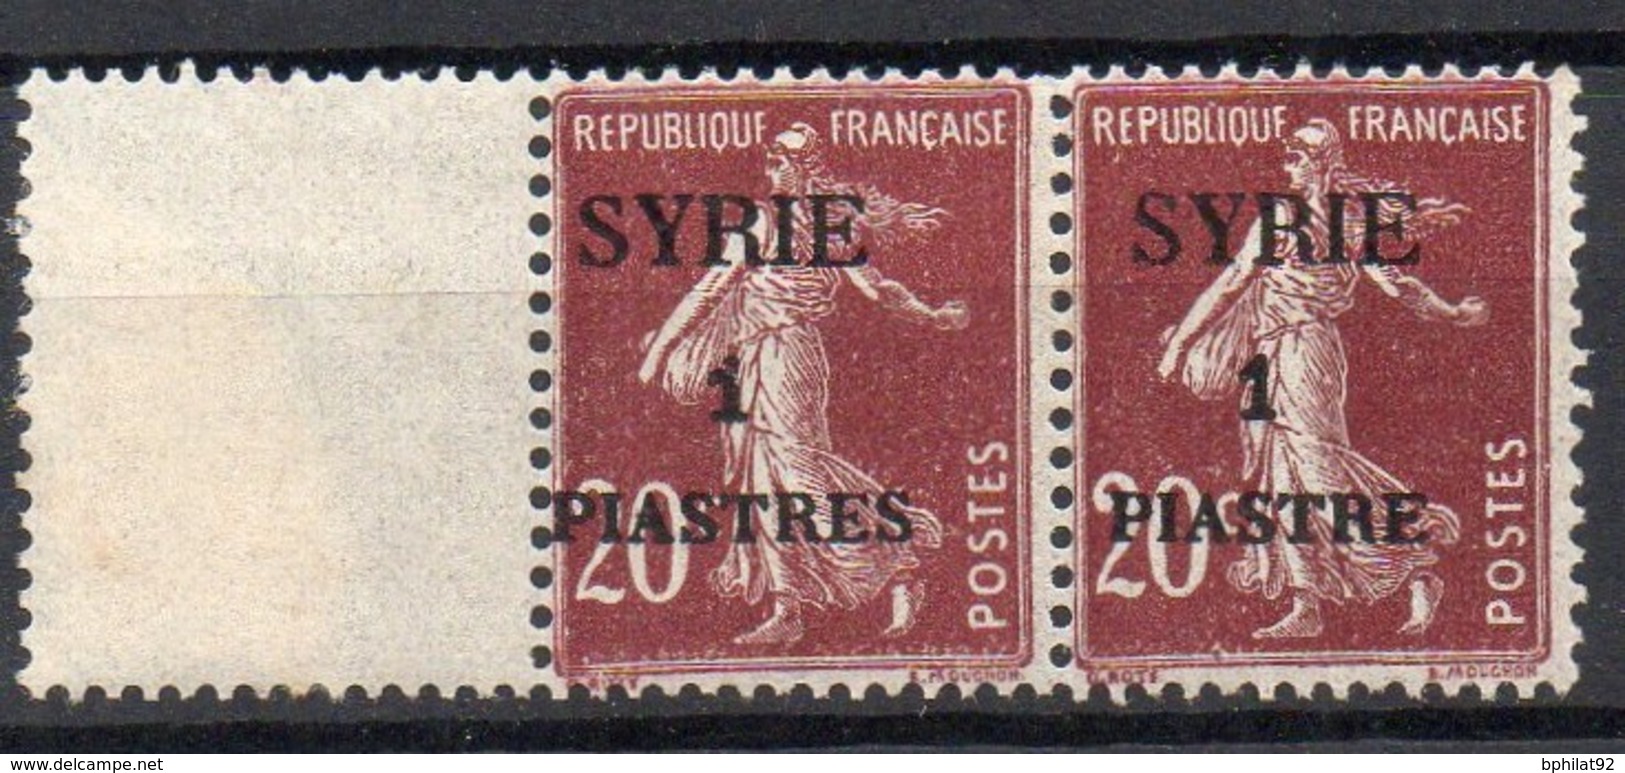 !!! PRIX FIXE : SYRIE, PAIRE DU N°109/109a VARIETE PIASTRES AVEC S NEUVE ** - Unused Stamps